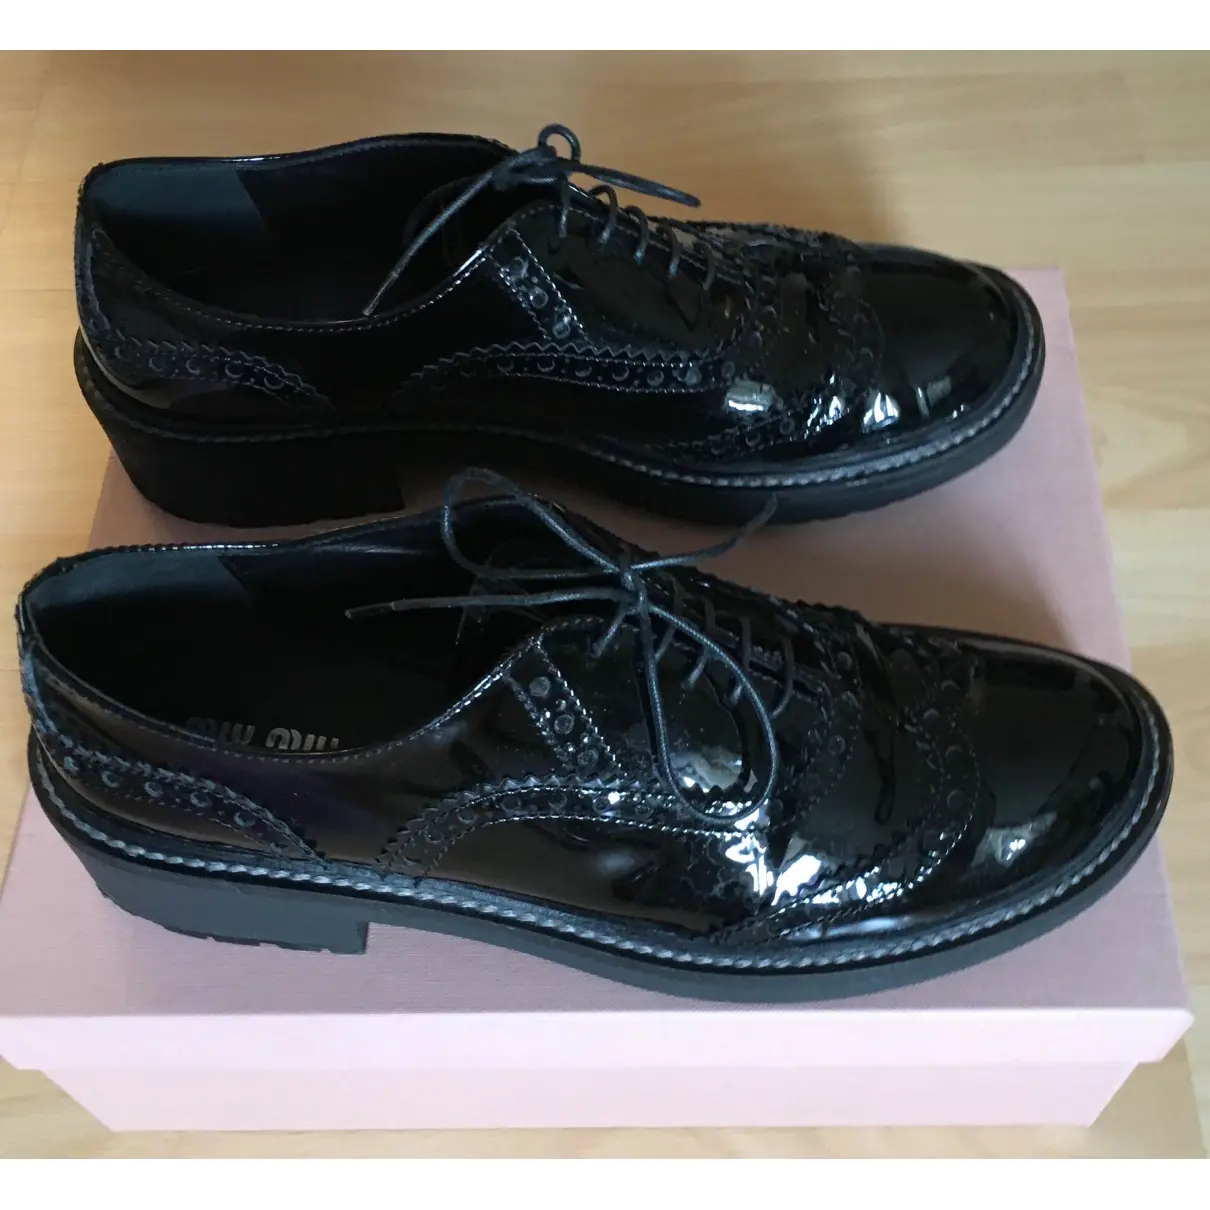 Buy Miu Miu Patent leather lace ups online